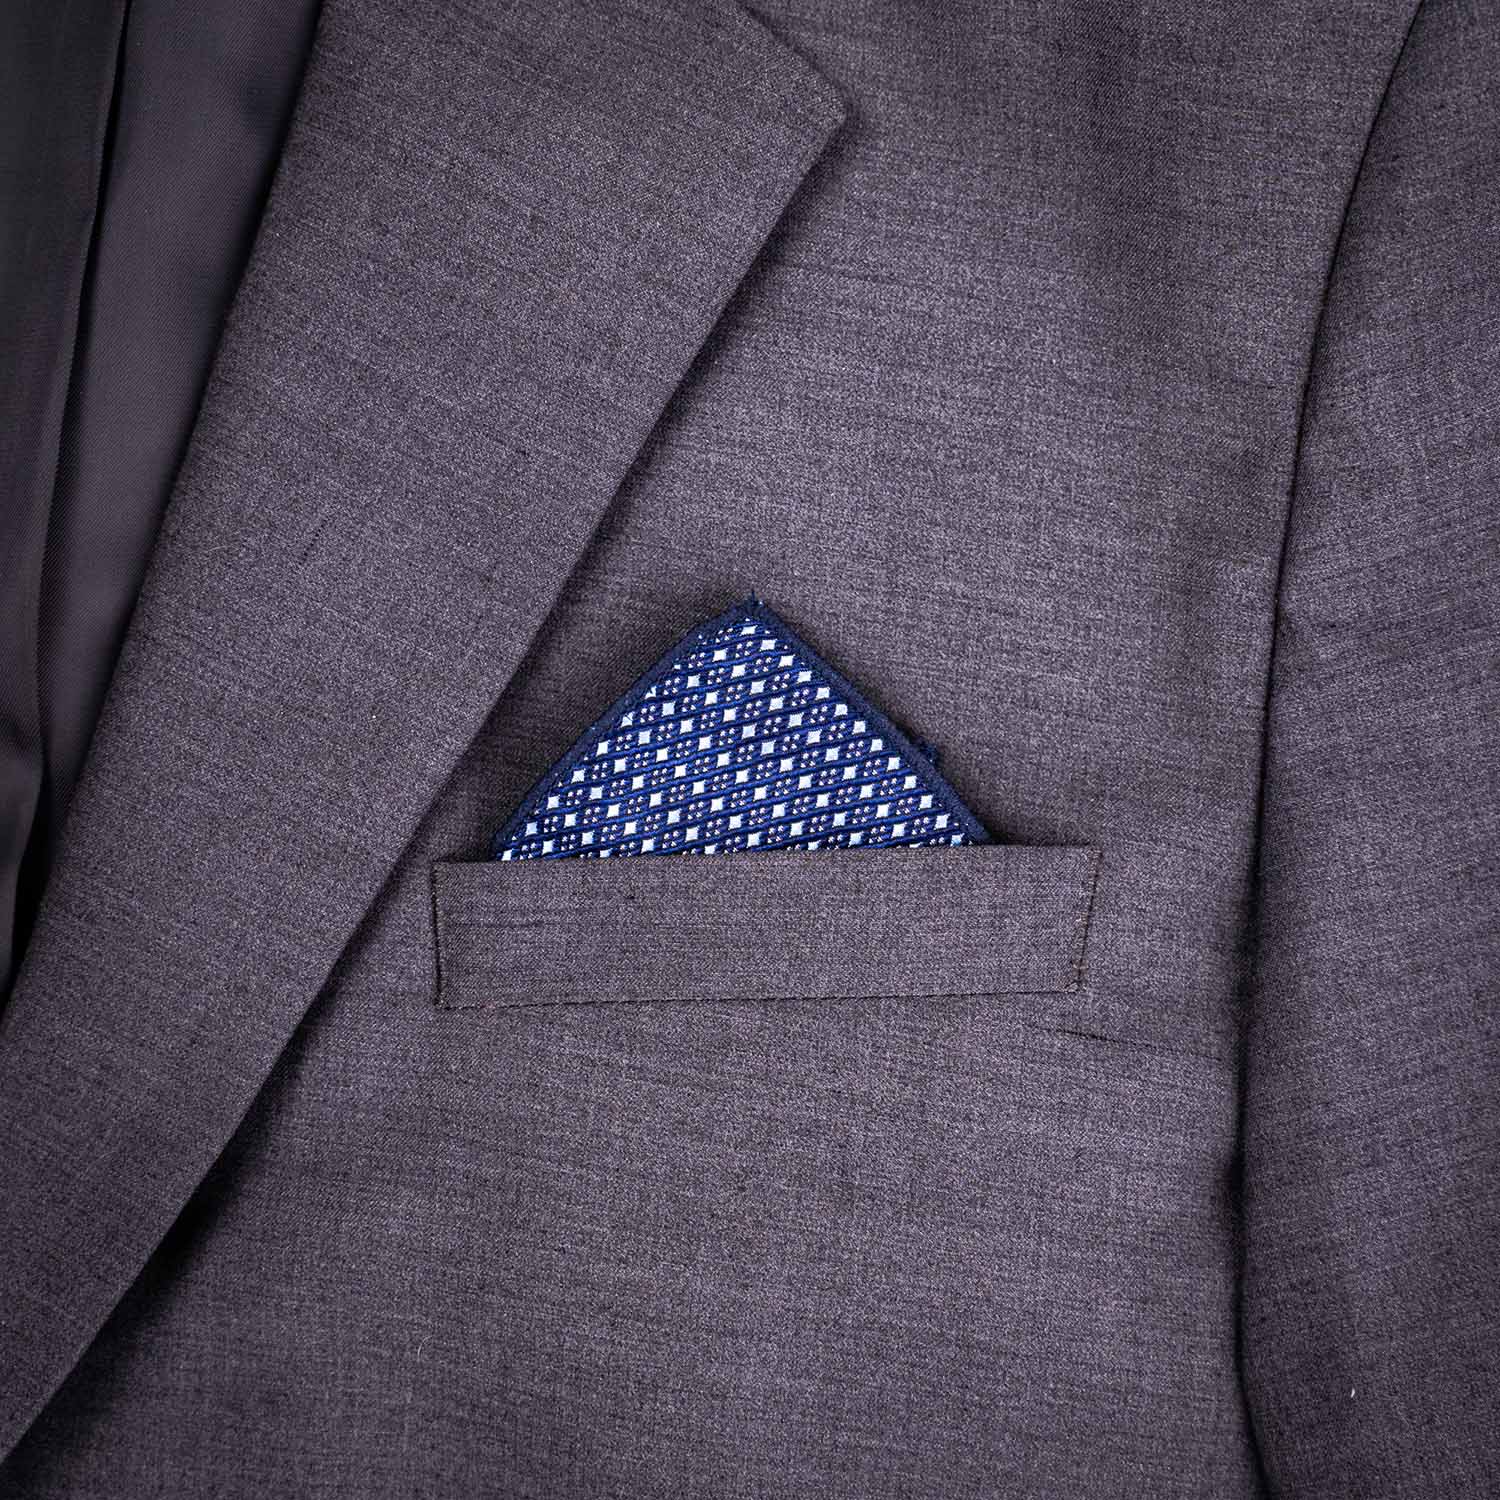 Navy blue suit pattern pocket square